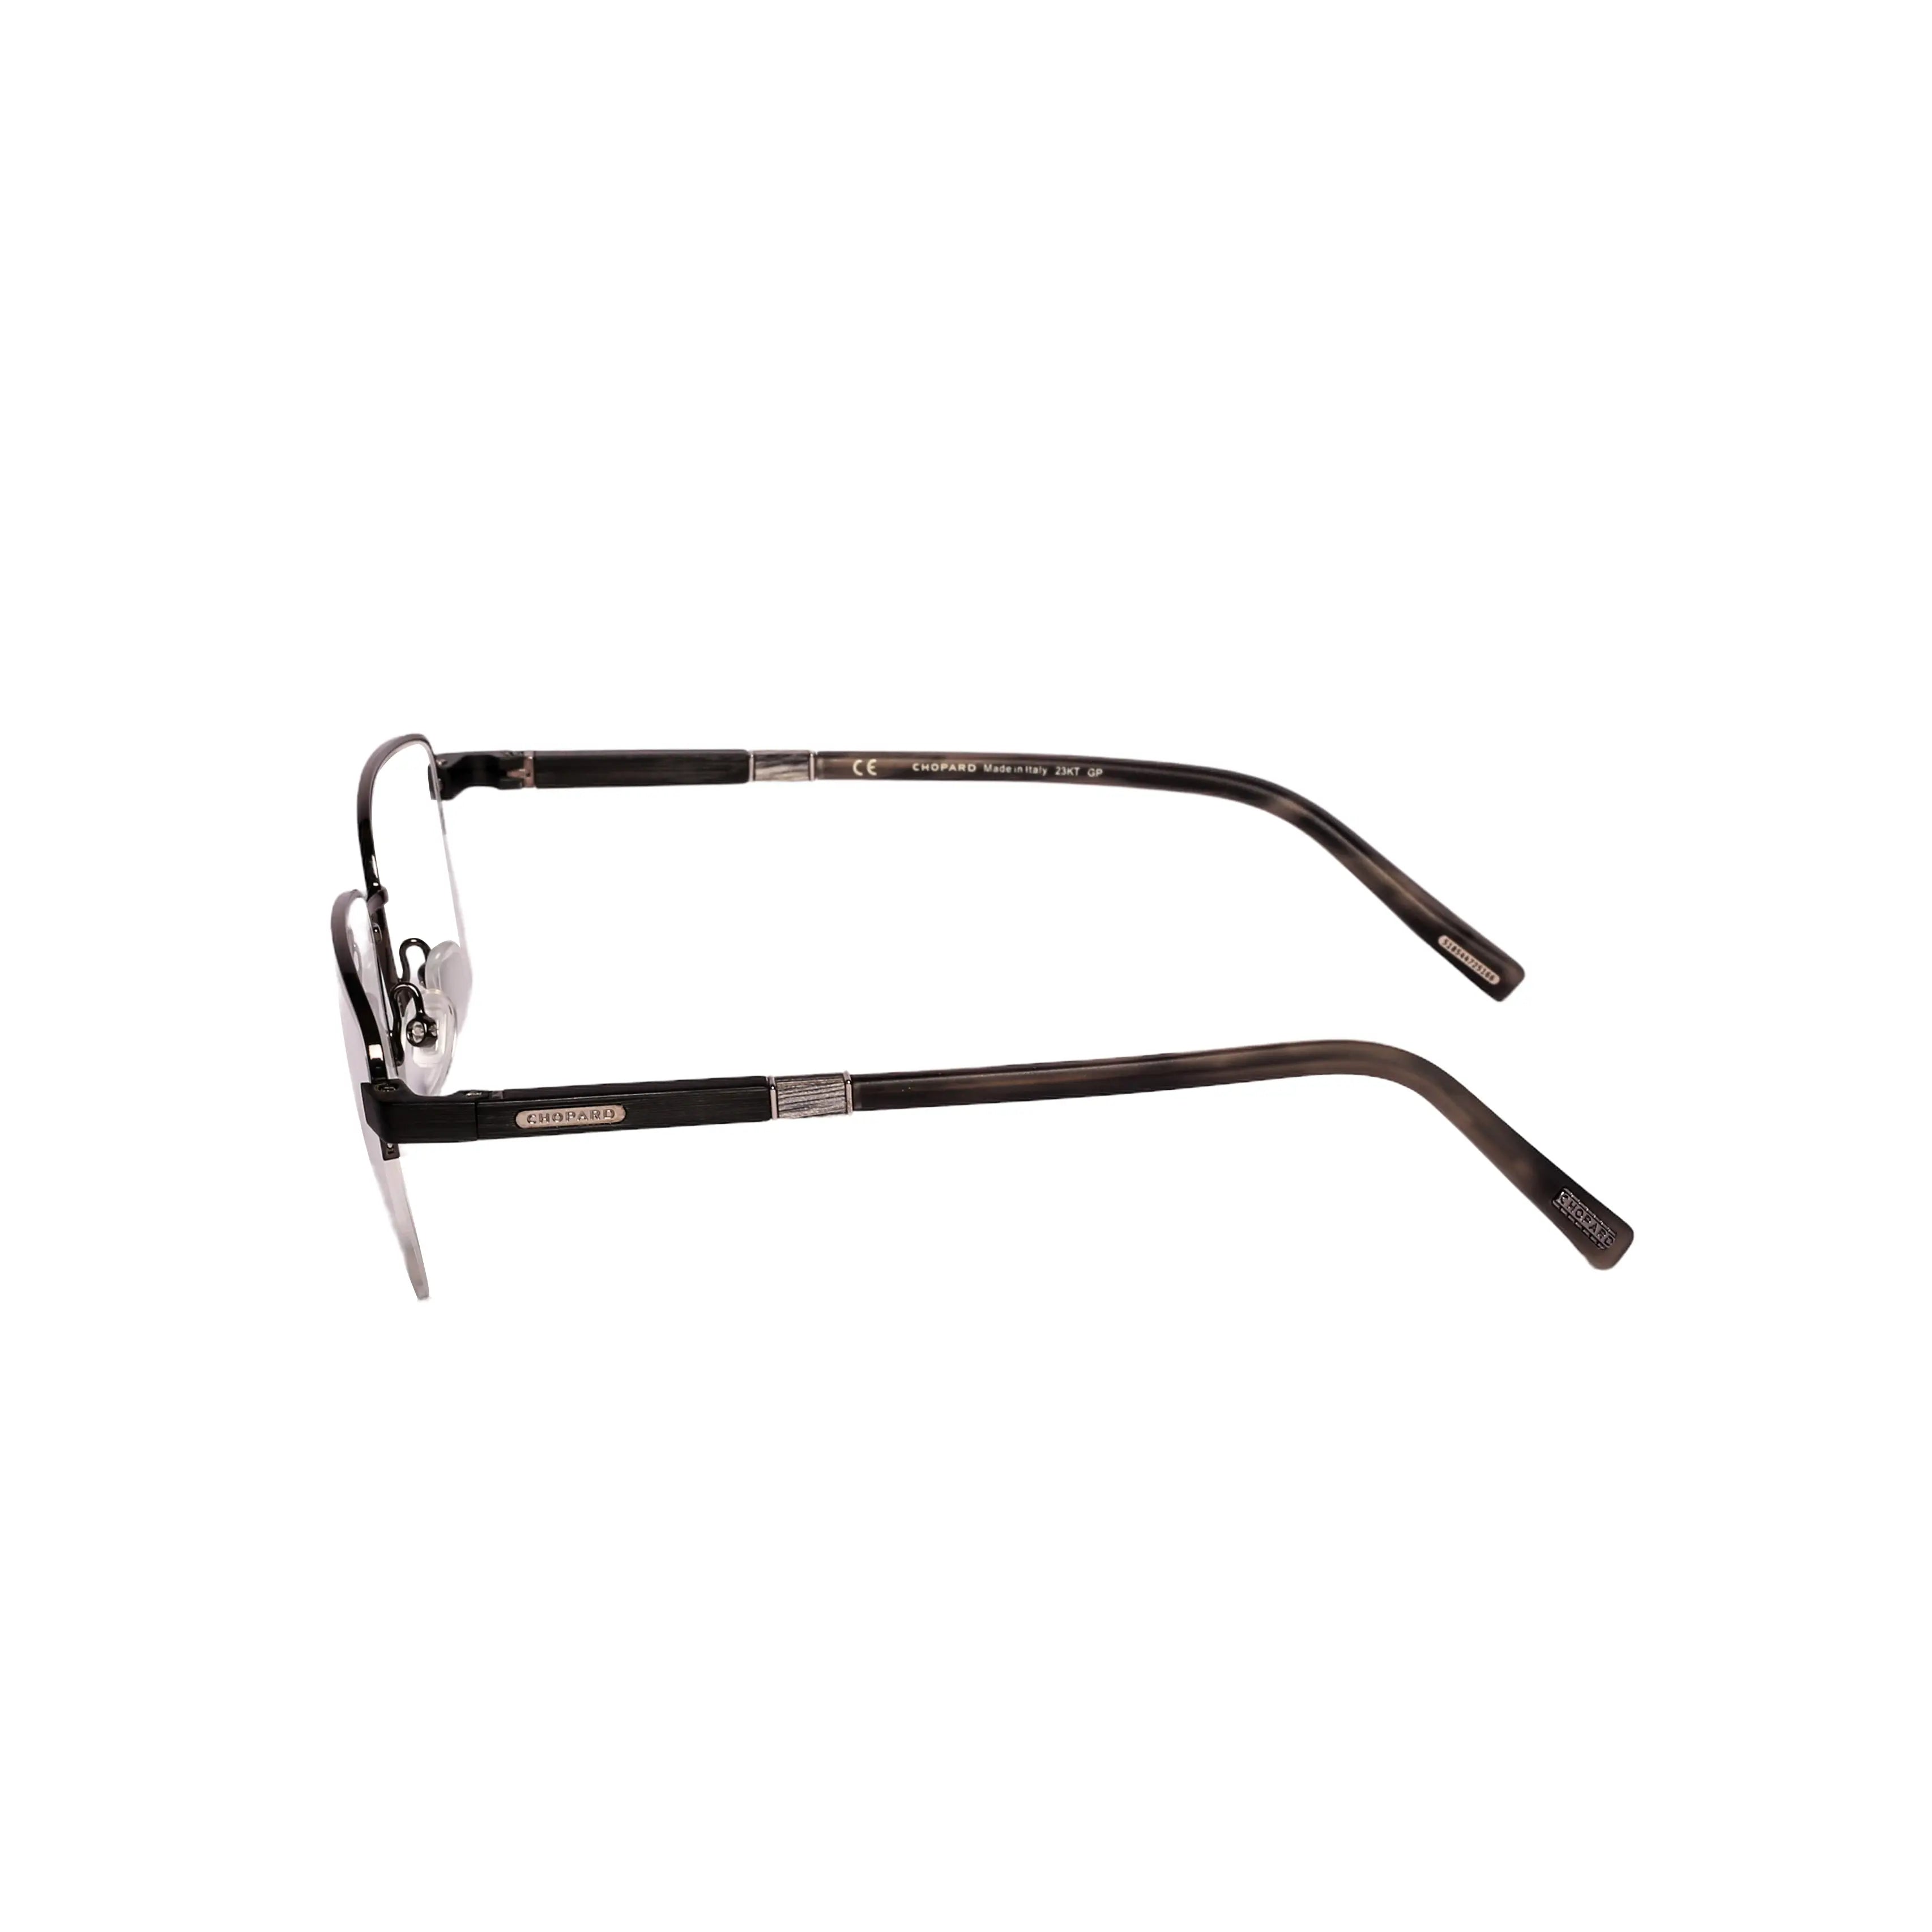 CHOPARD-VCHF 55-56-568 Eyeglasses - Premium Eyeglasses from Chopard - Just Rs. 44000! Shop now at Laxmi Opticians